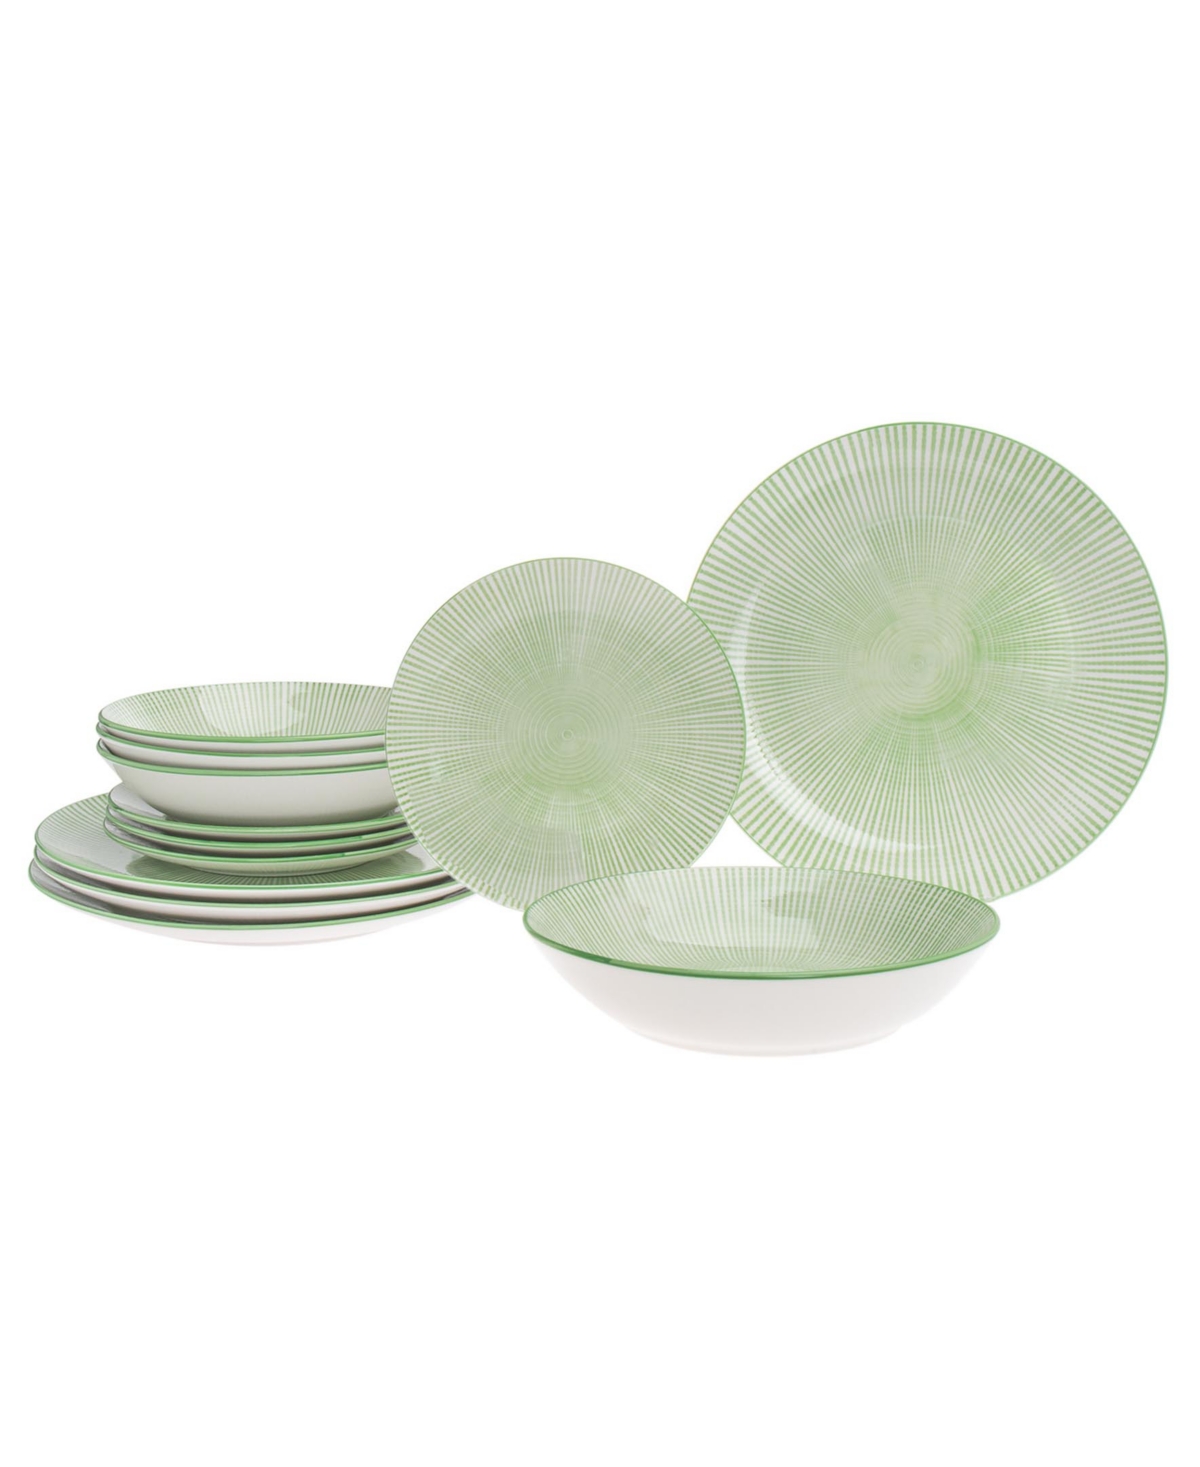 Light green 12-pc Dinnerware Sets, Service for 4 - Green